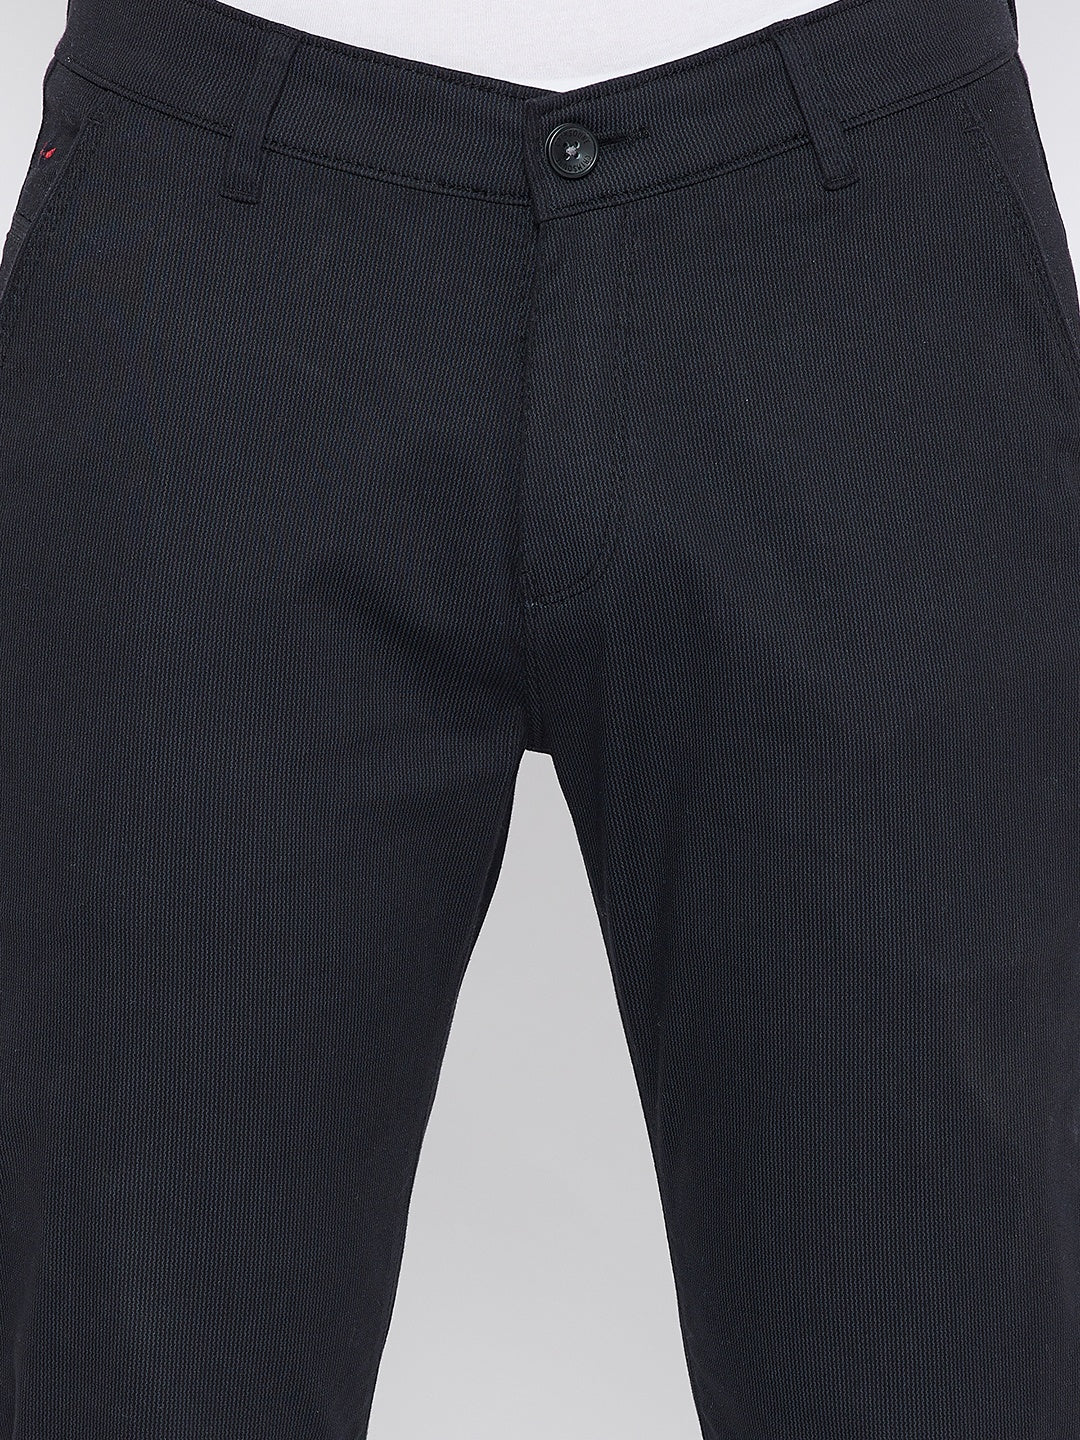 Black Printed Slim Fit Trousers - Men Trousers